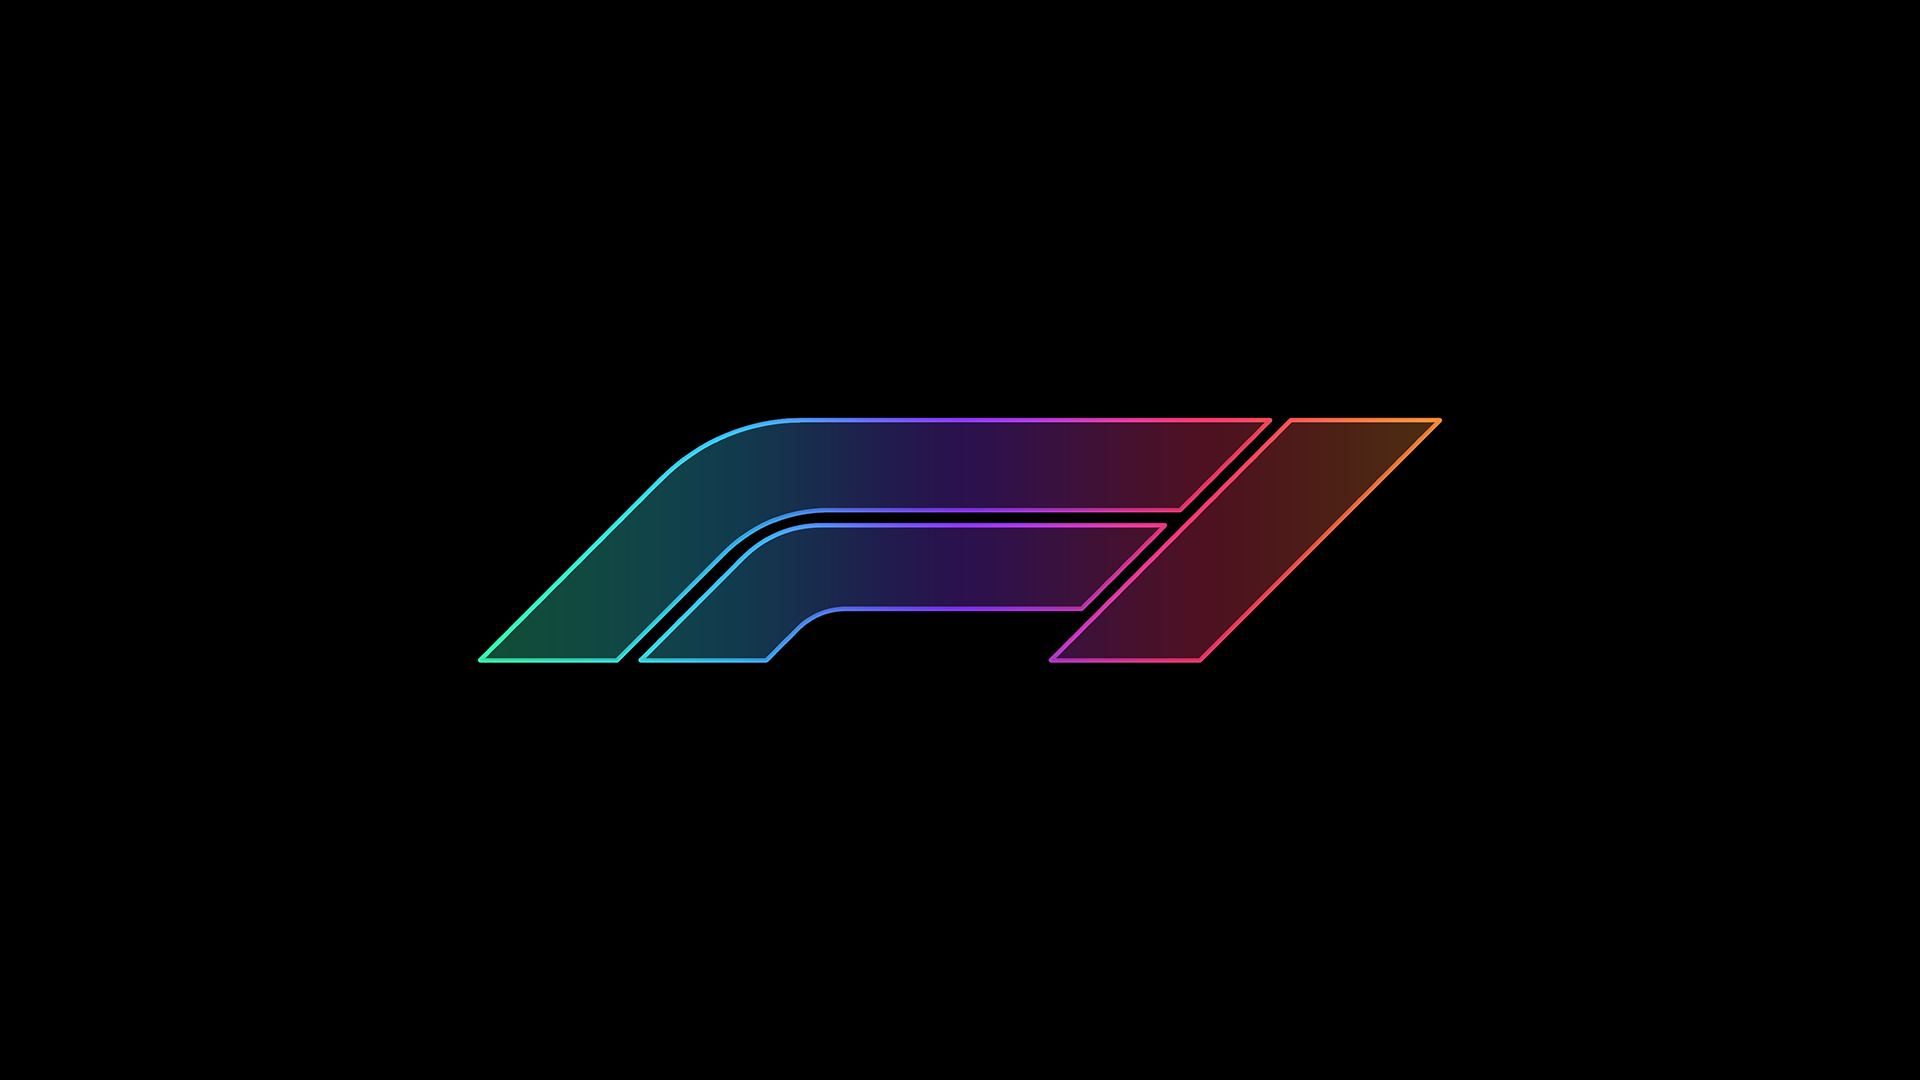 OC F1 Logo Wallpaper Dark Theme